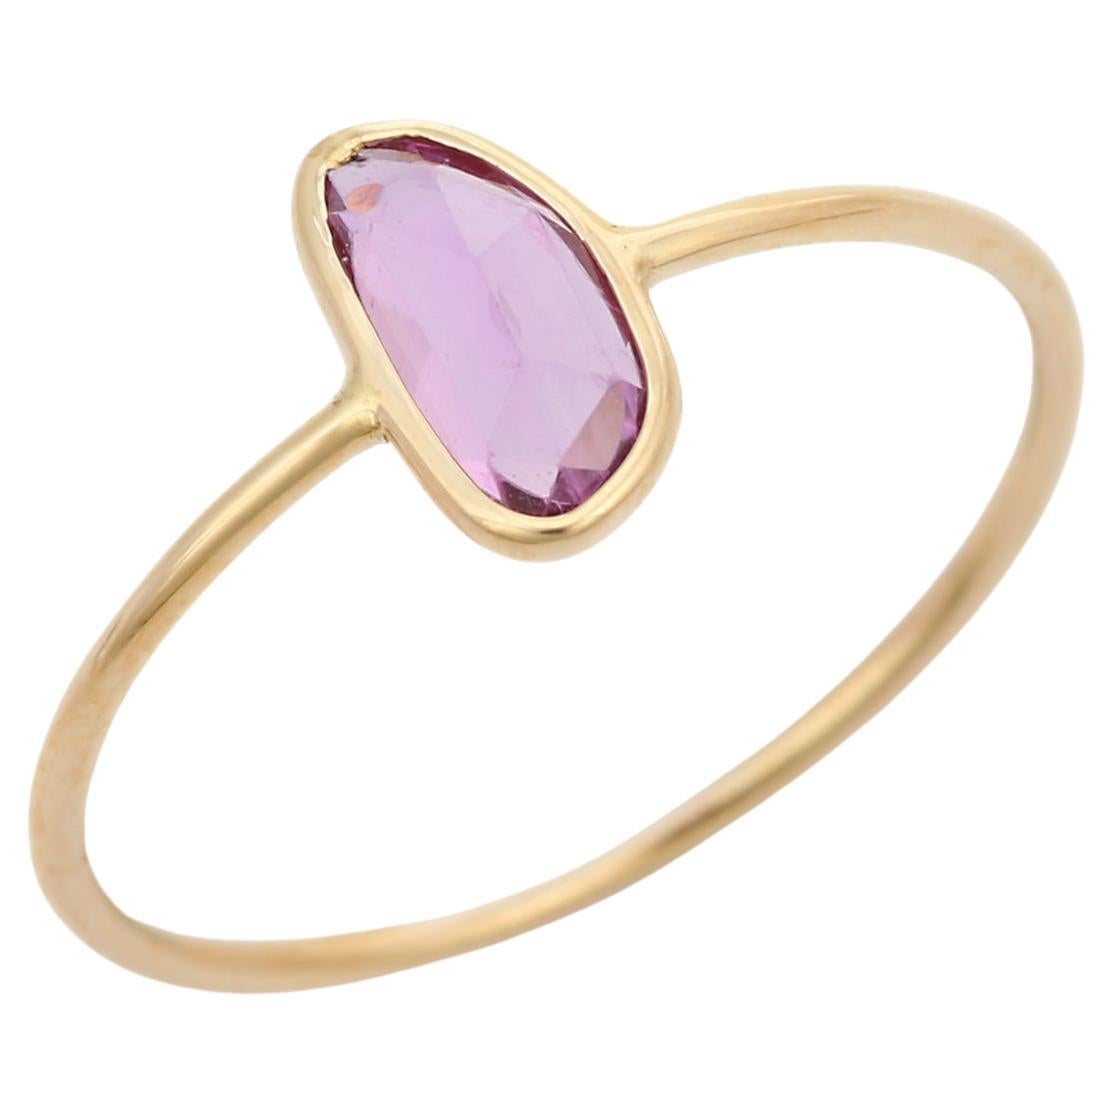 Handcrafted Pink Sapphire Gemstone Single Stone Ring in 14 Karat Yellow Gold